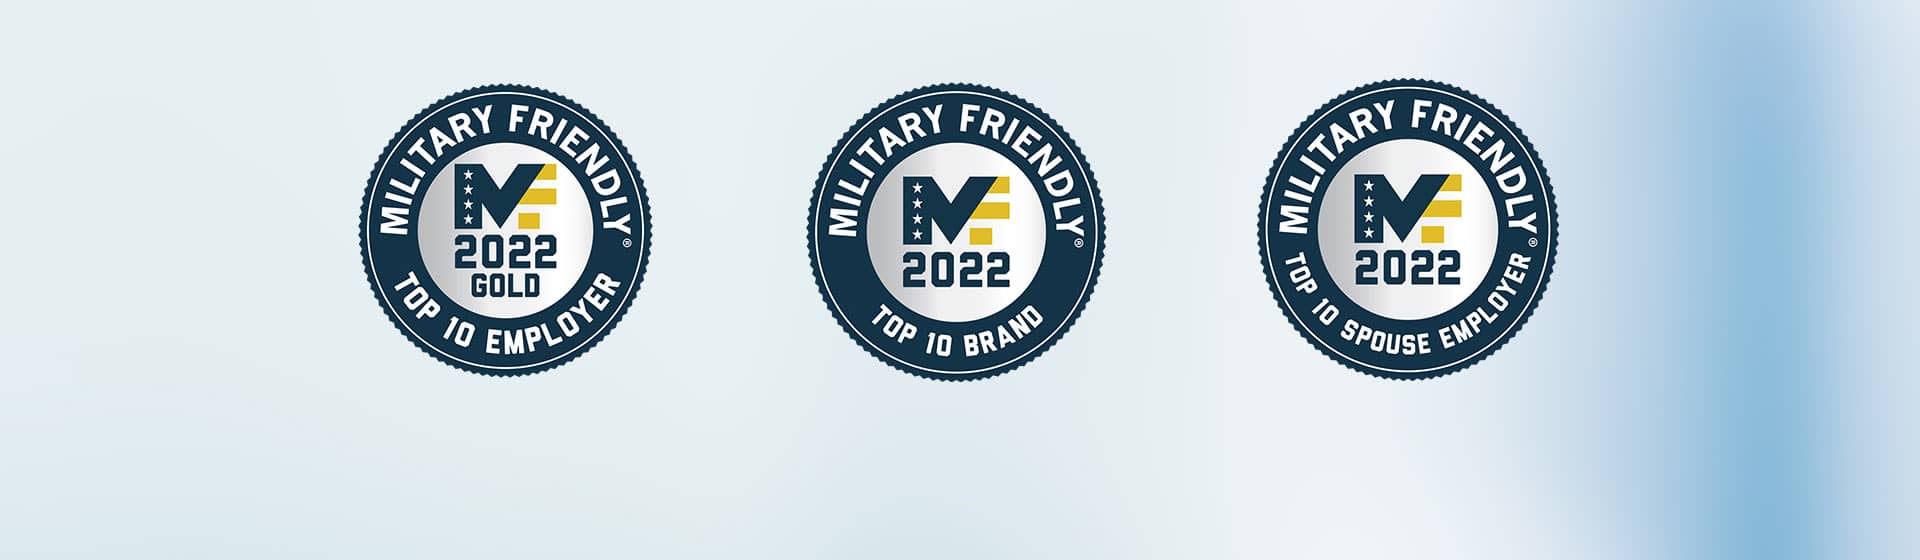 2022 Military Friendly Logos